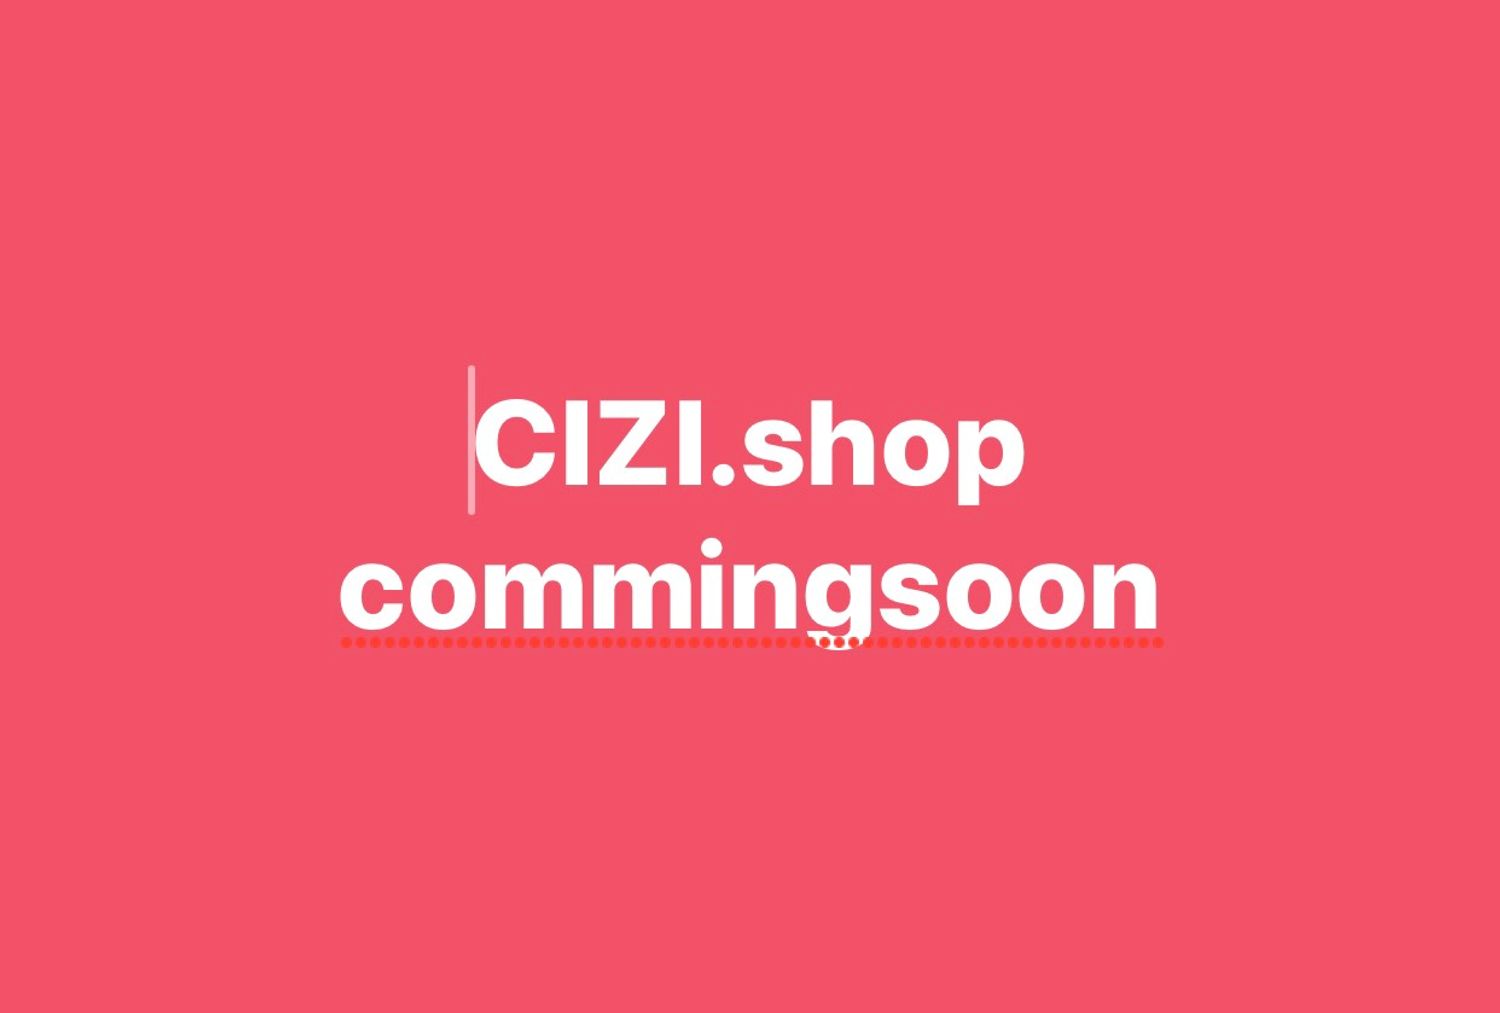 CiZi.shop